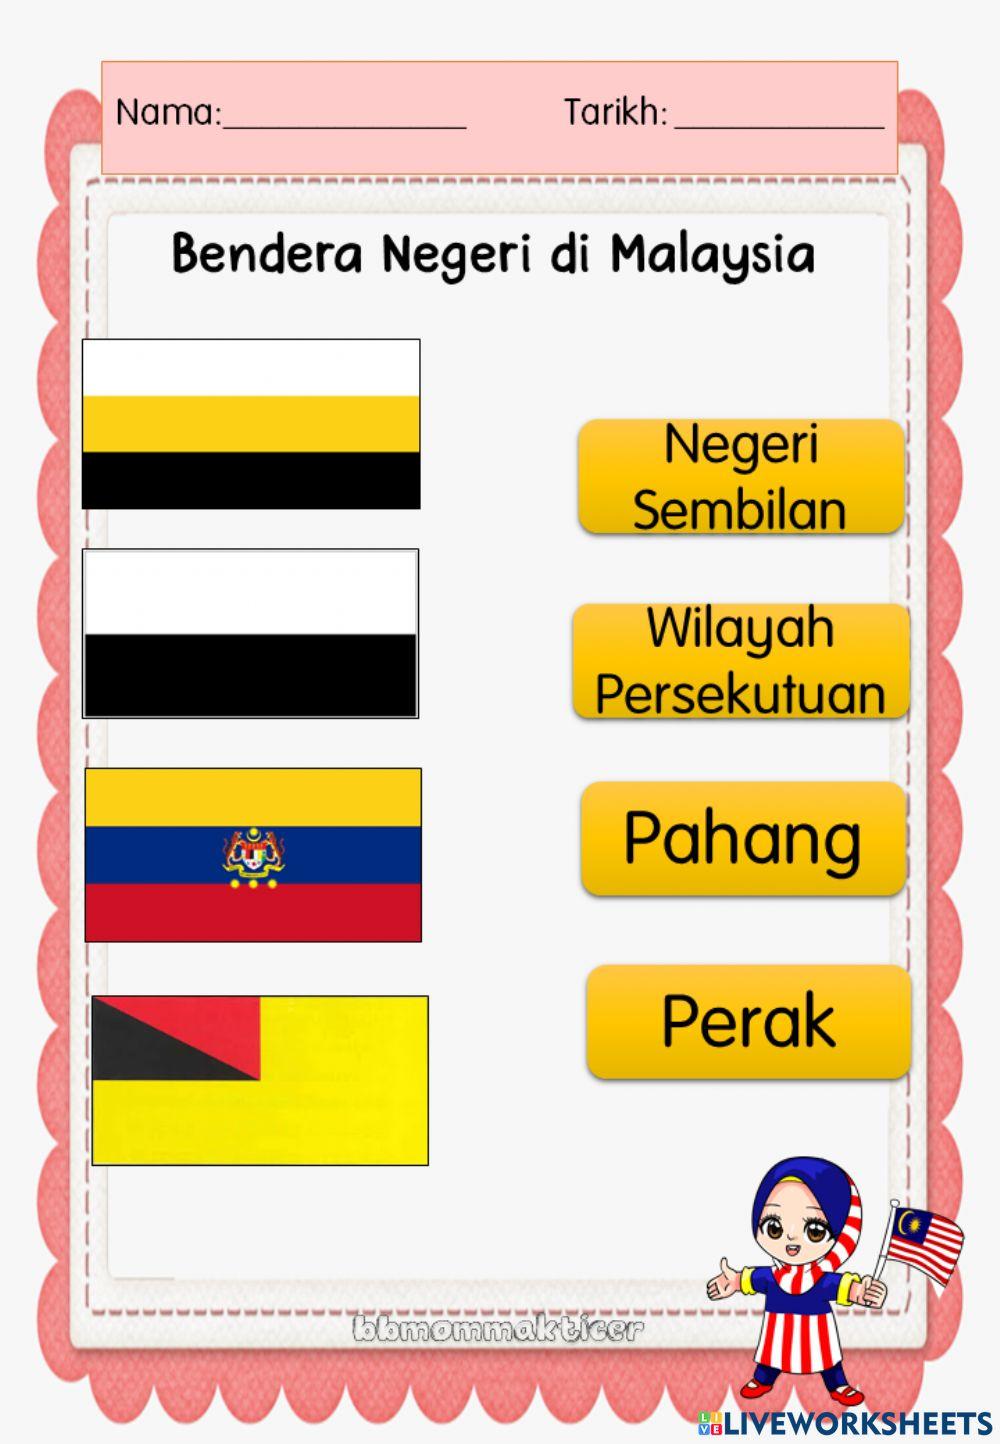 Bendera Negeri di Malaysia